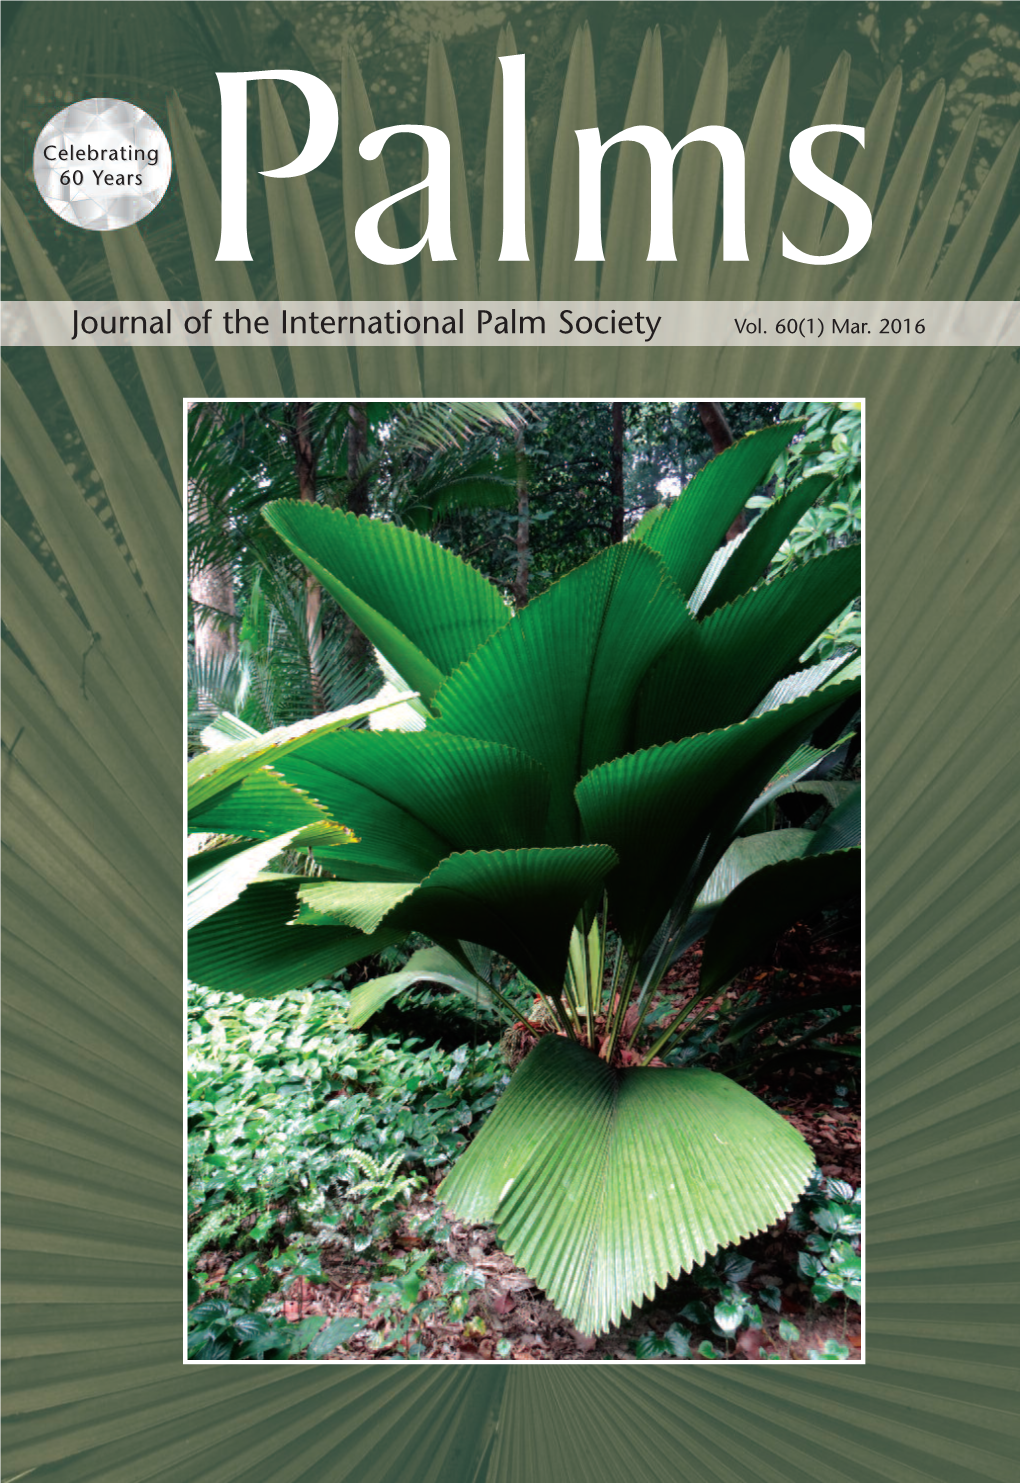 Journal of the International Palm Society Vol. 60(1) Mar. 2016 the INTERNATIONAL PALM SOCIETY, INC